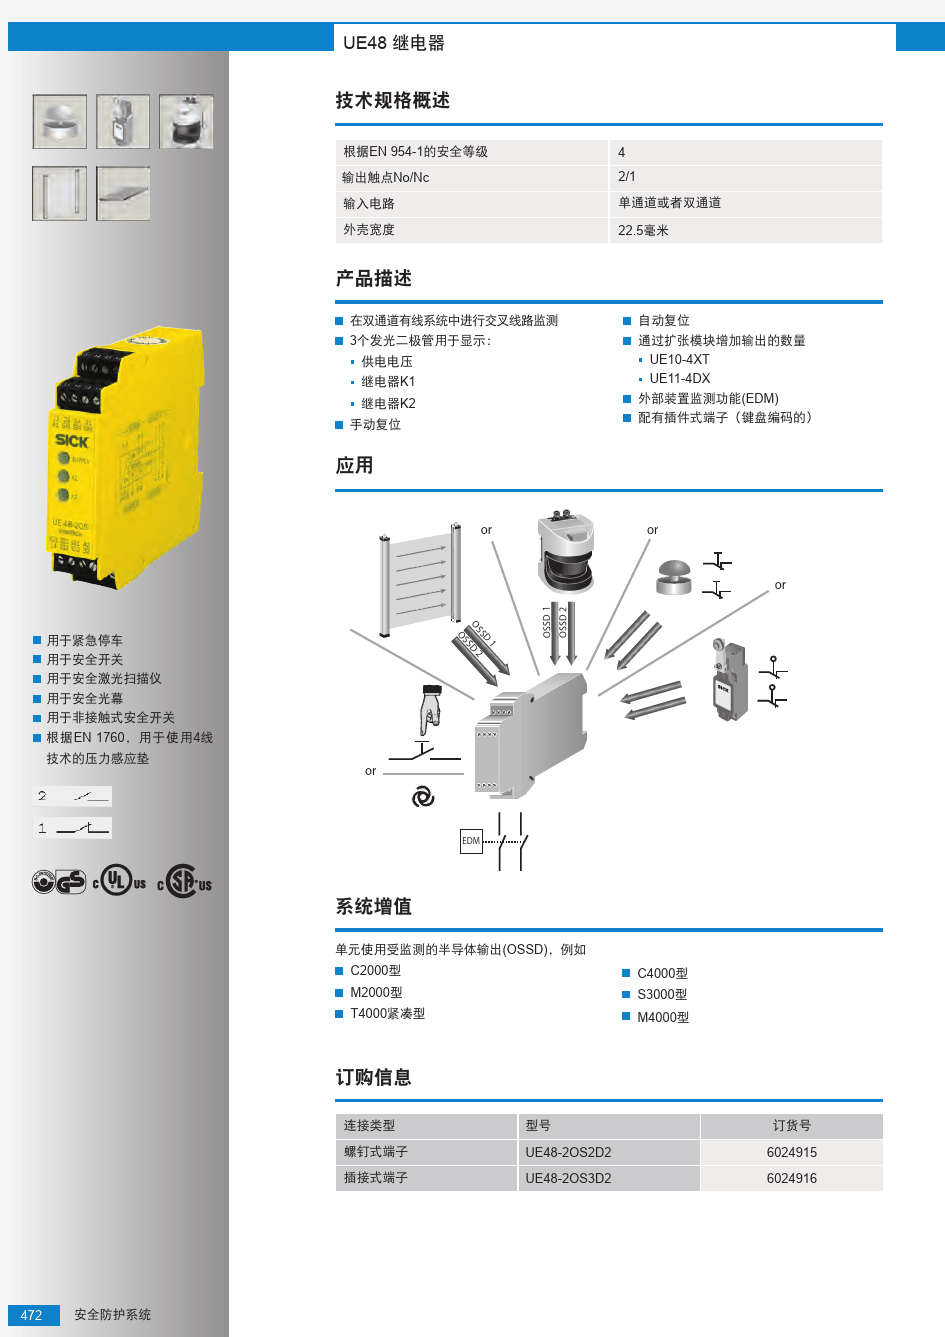 UE48安全继电器选型手册(中文版)